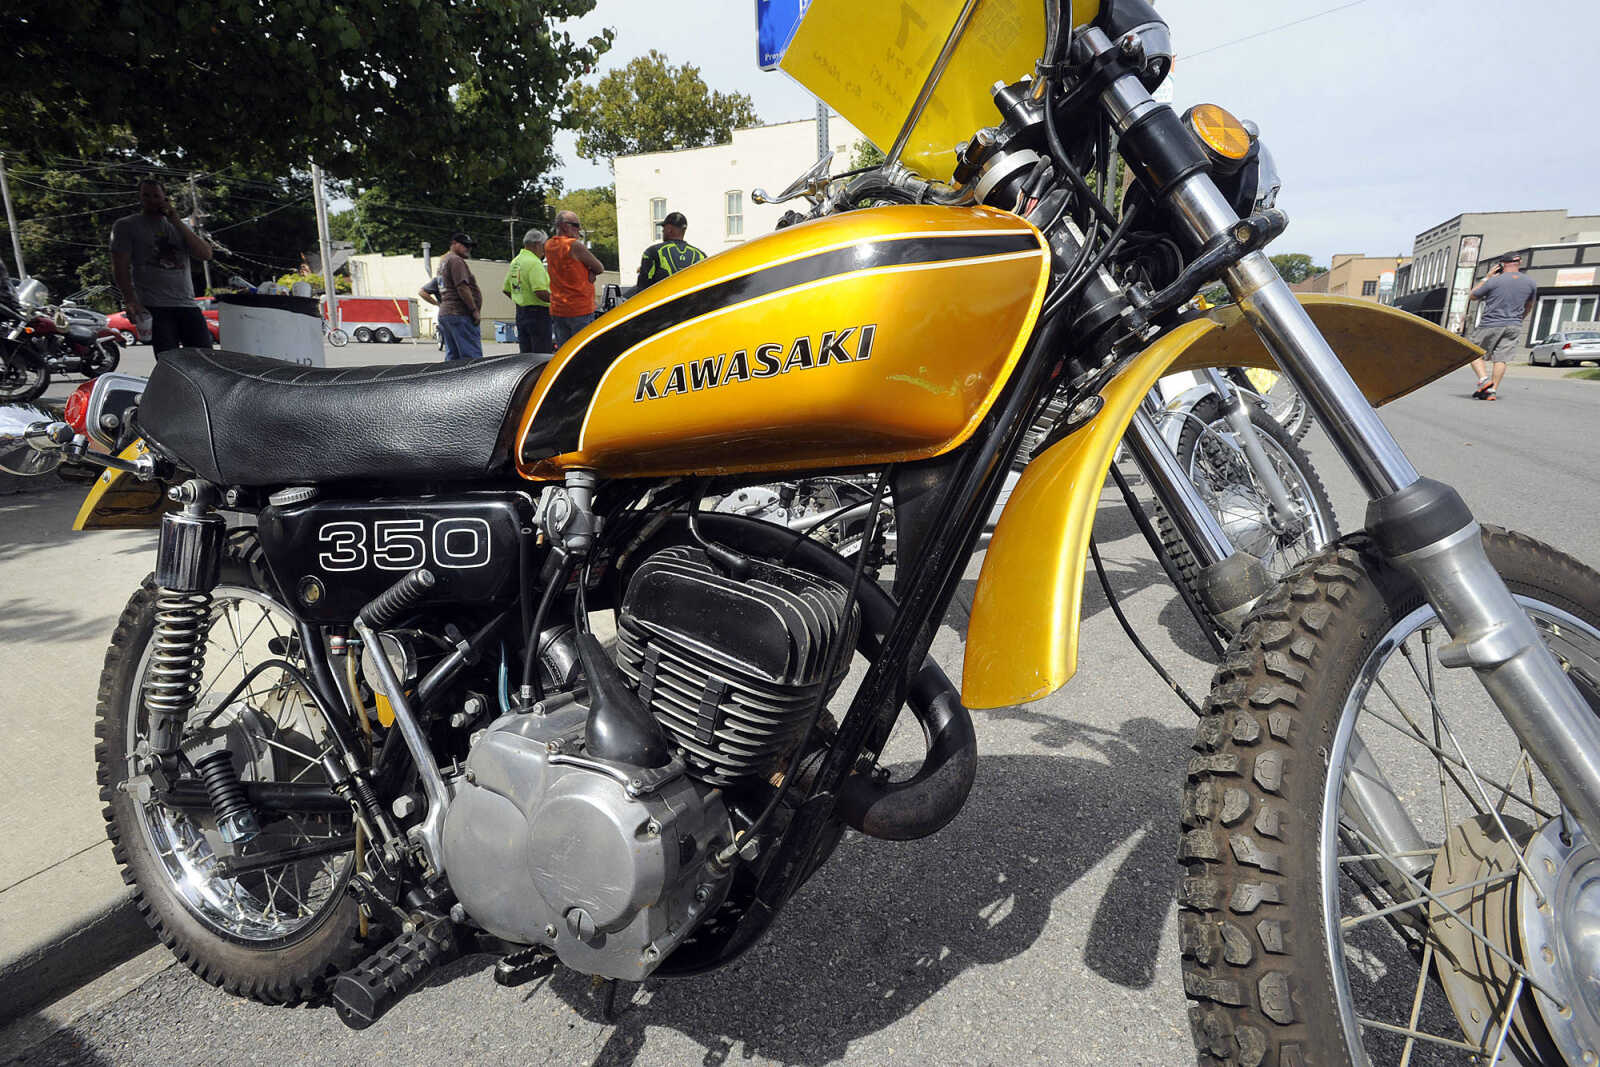 Cape girardeau honda motorcycles